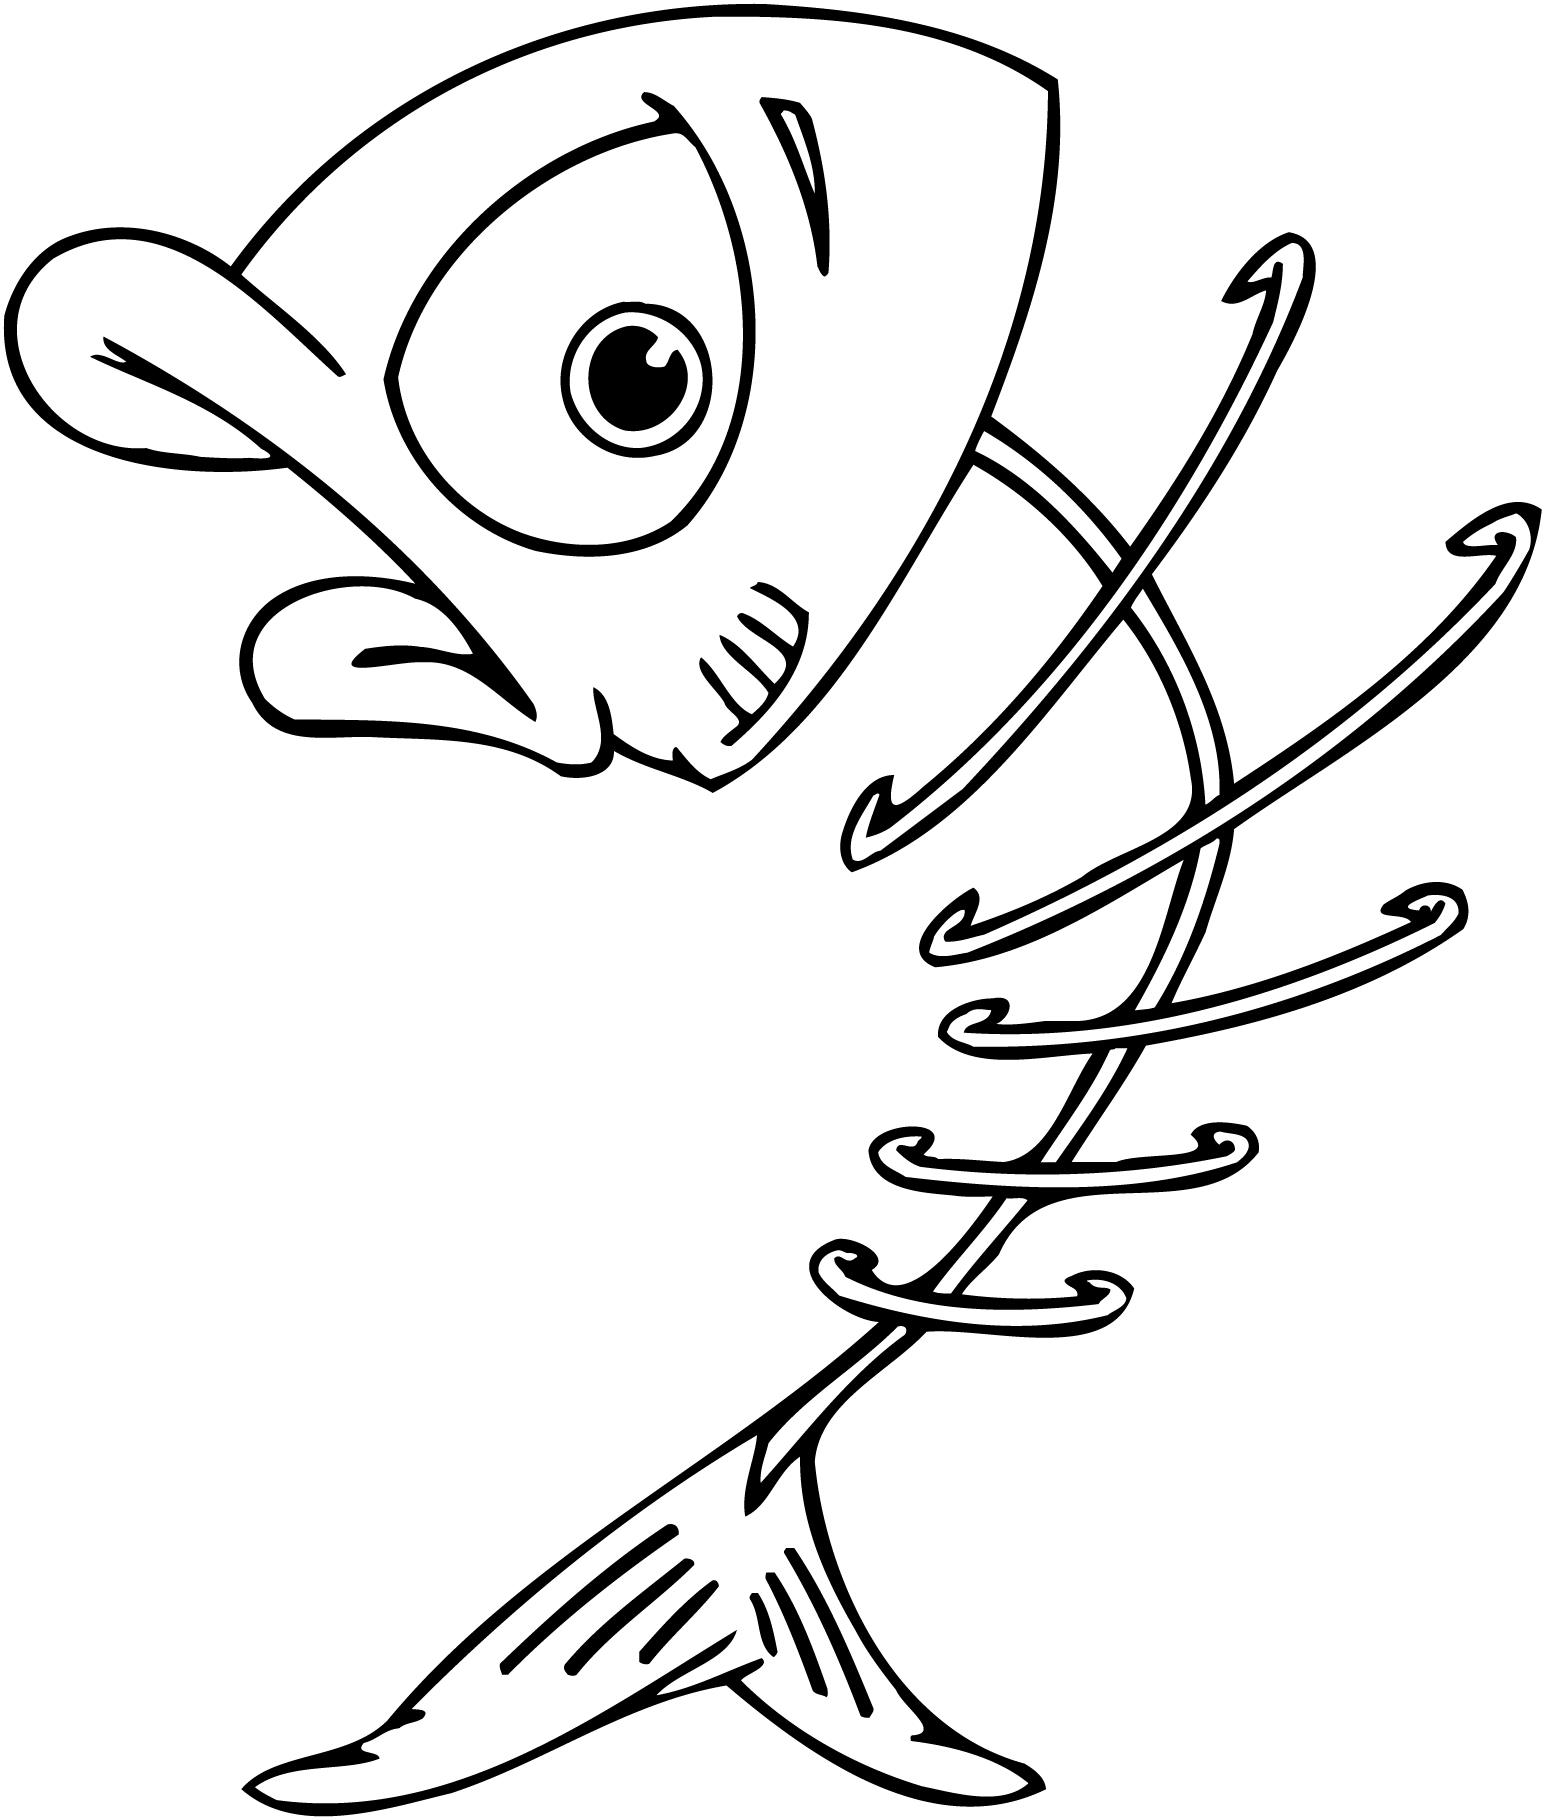 Fish skeleton clip art clipart